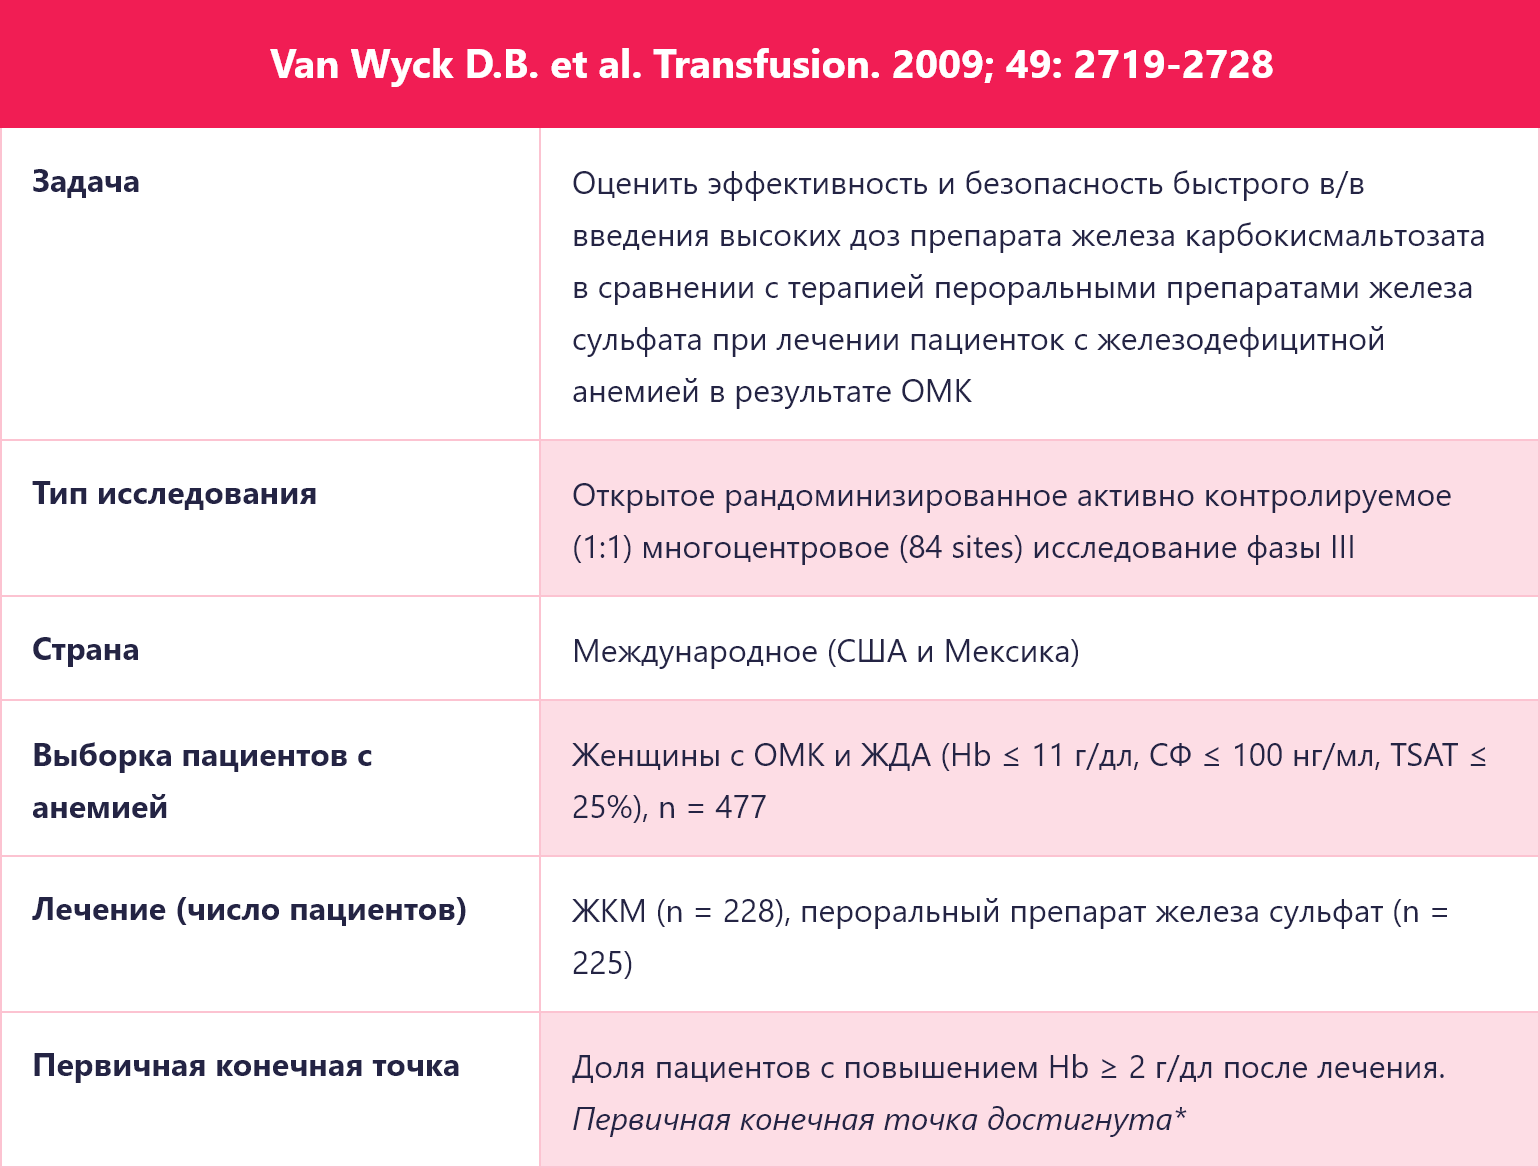 Van Wyck D.B. et al. Transfusion. 2009; 49: 2719-2728